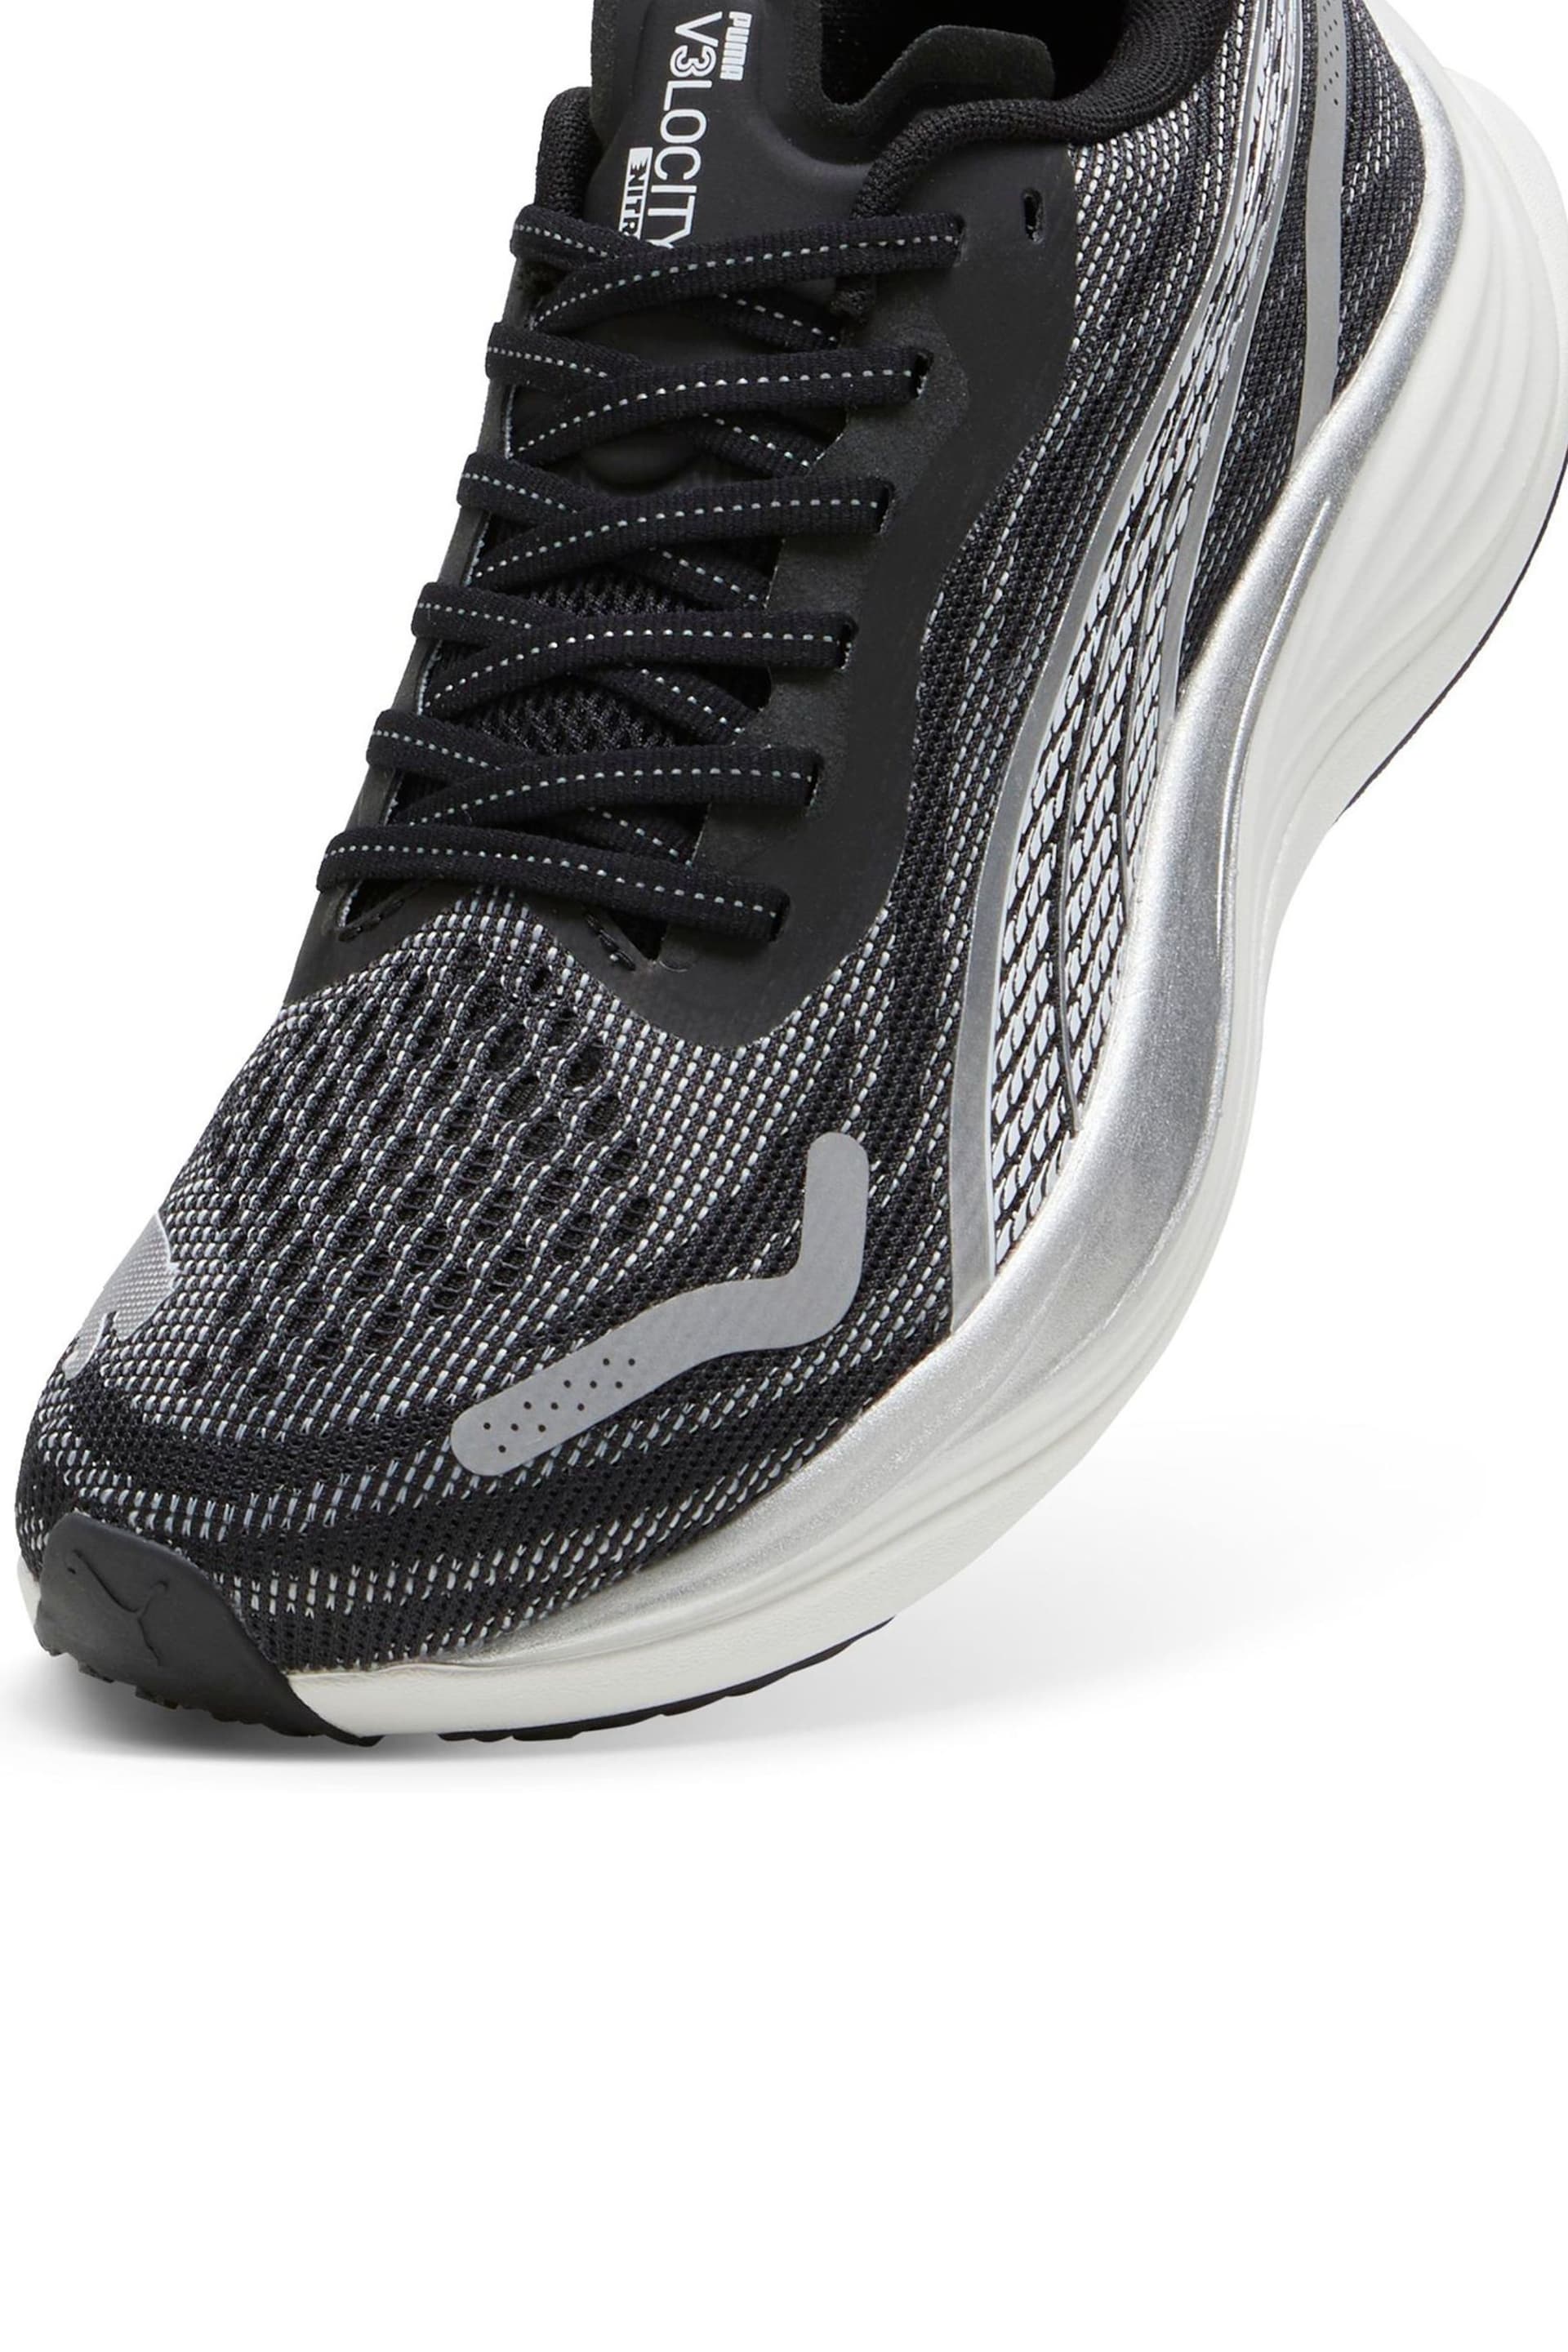 Puma Black Mens Velocity Nitro™ 3 Running Shoes - Image 4 of 7